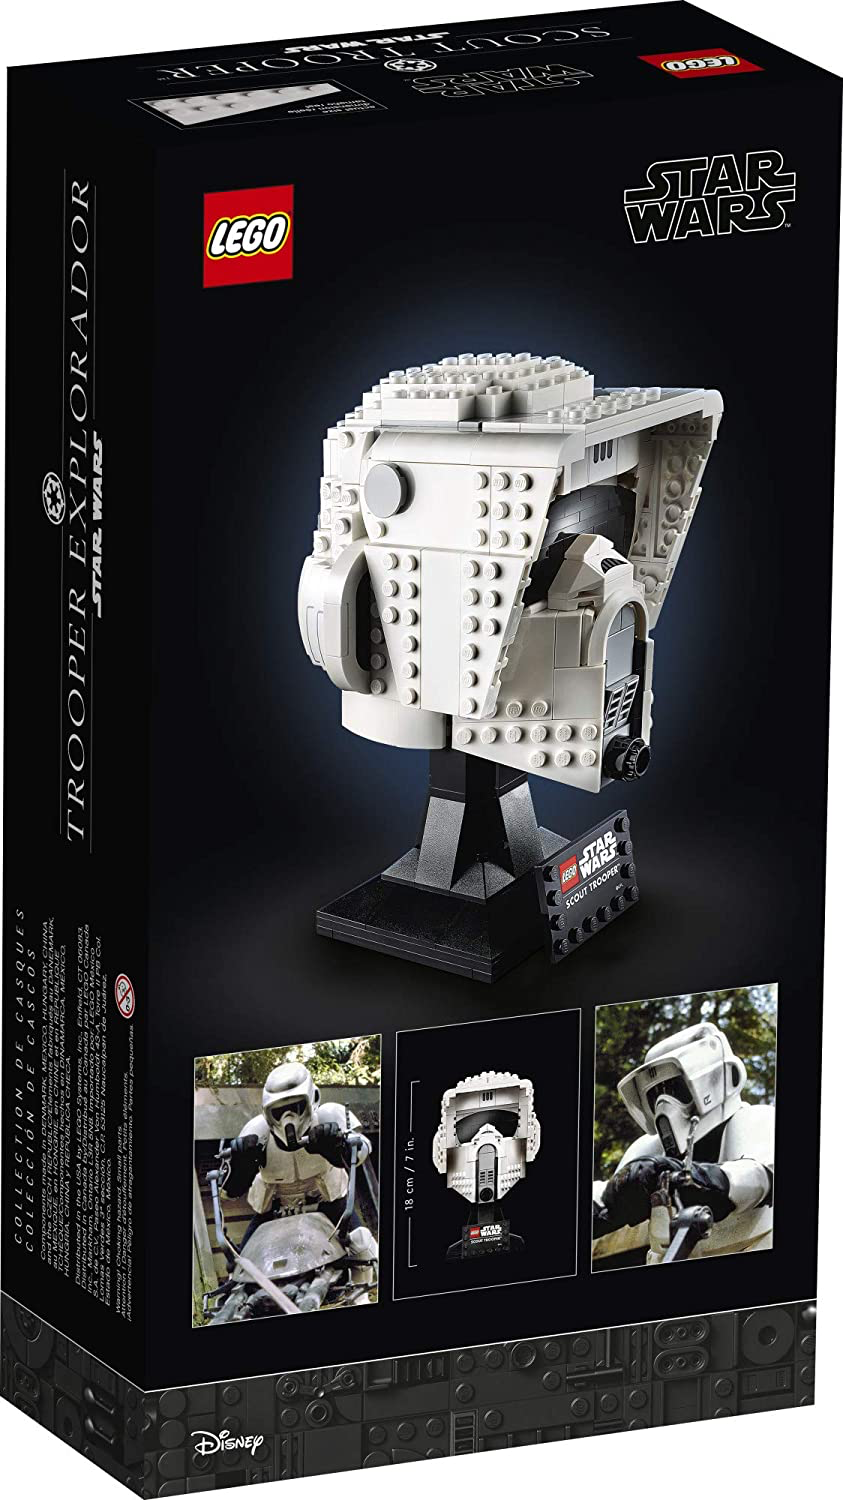 SW Imperial Scout Trooper Helmet Lego Set 2